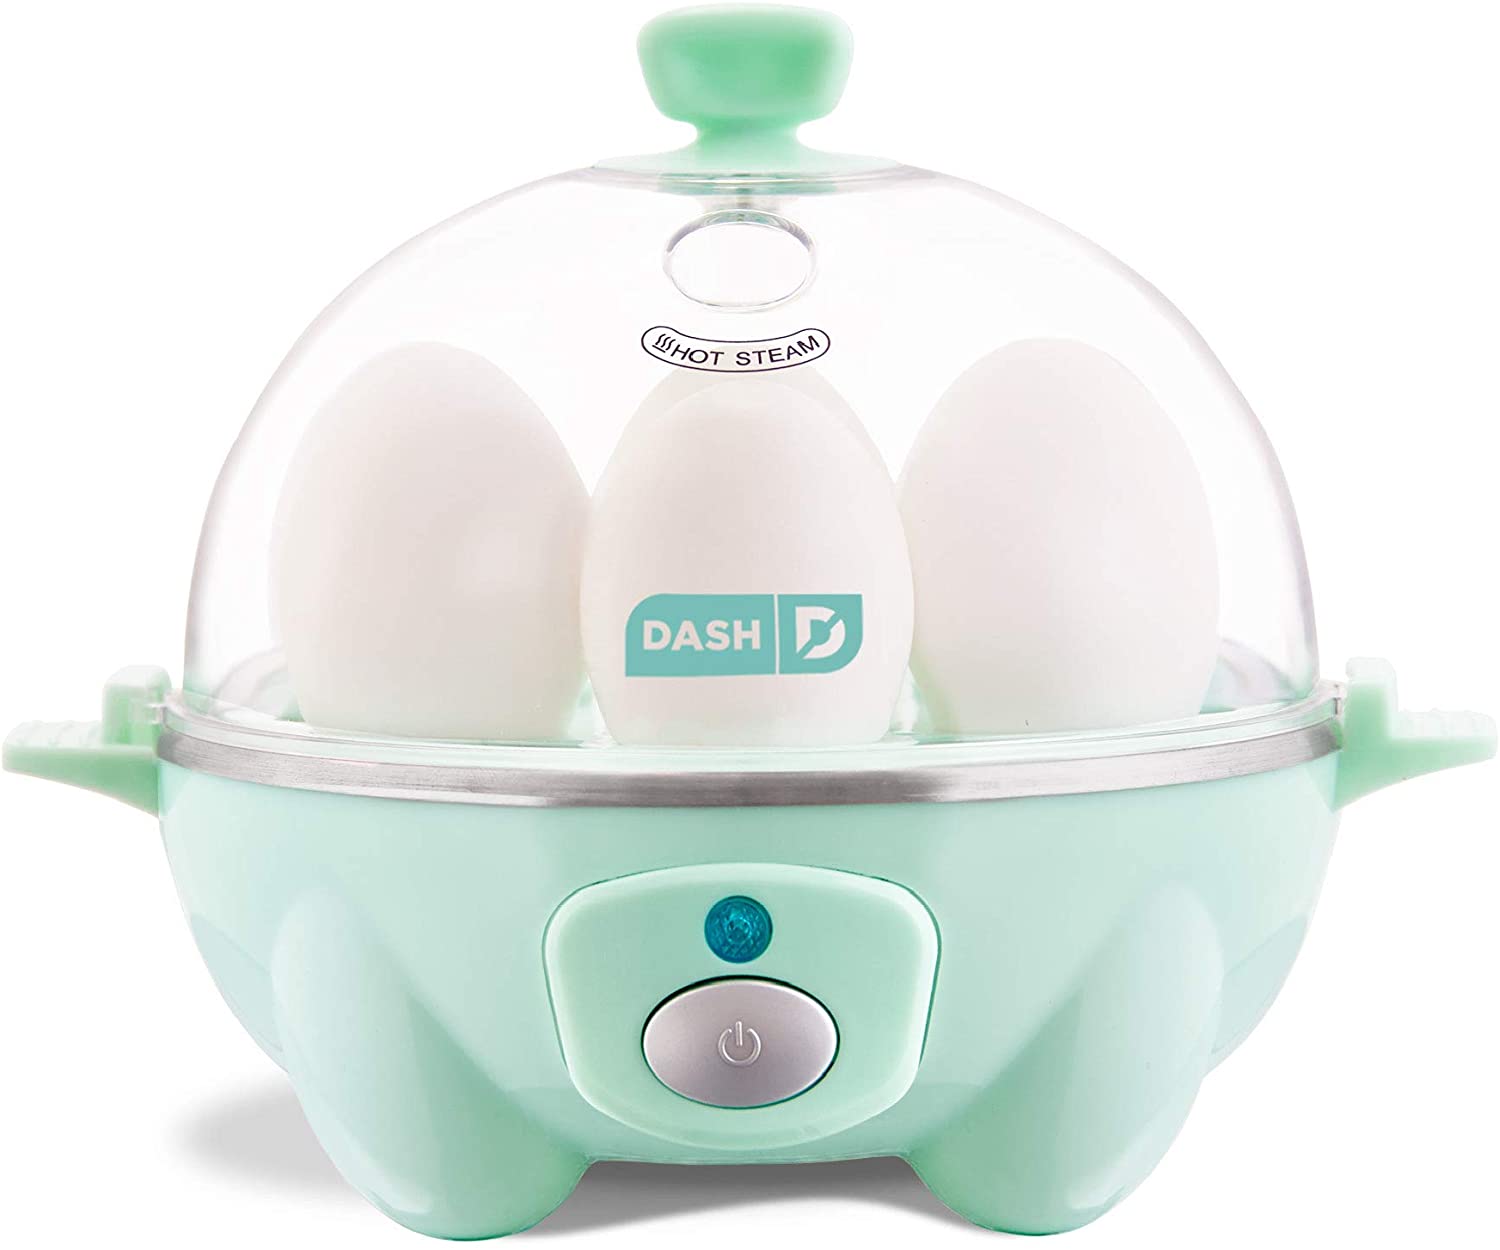 Dash rapid egg cooker